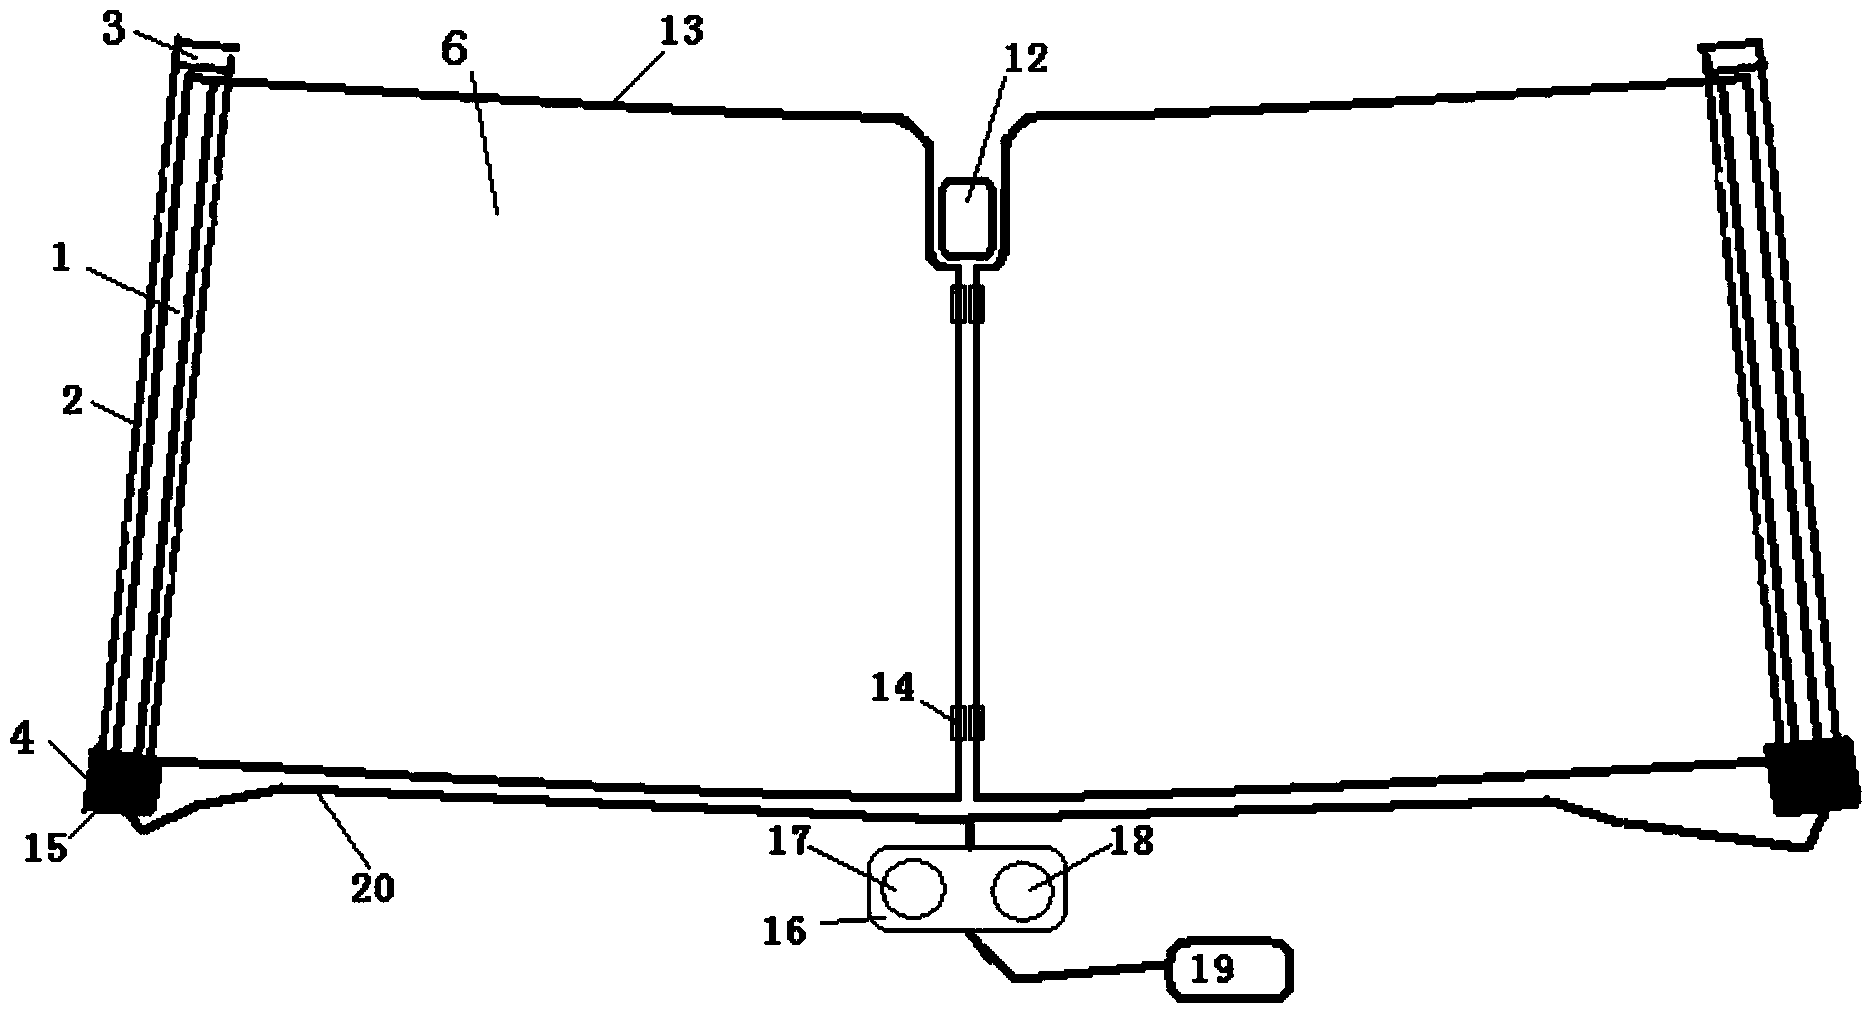 Left-right folio sunshade roller shutter for vehicle windscreen glass